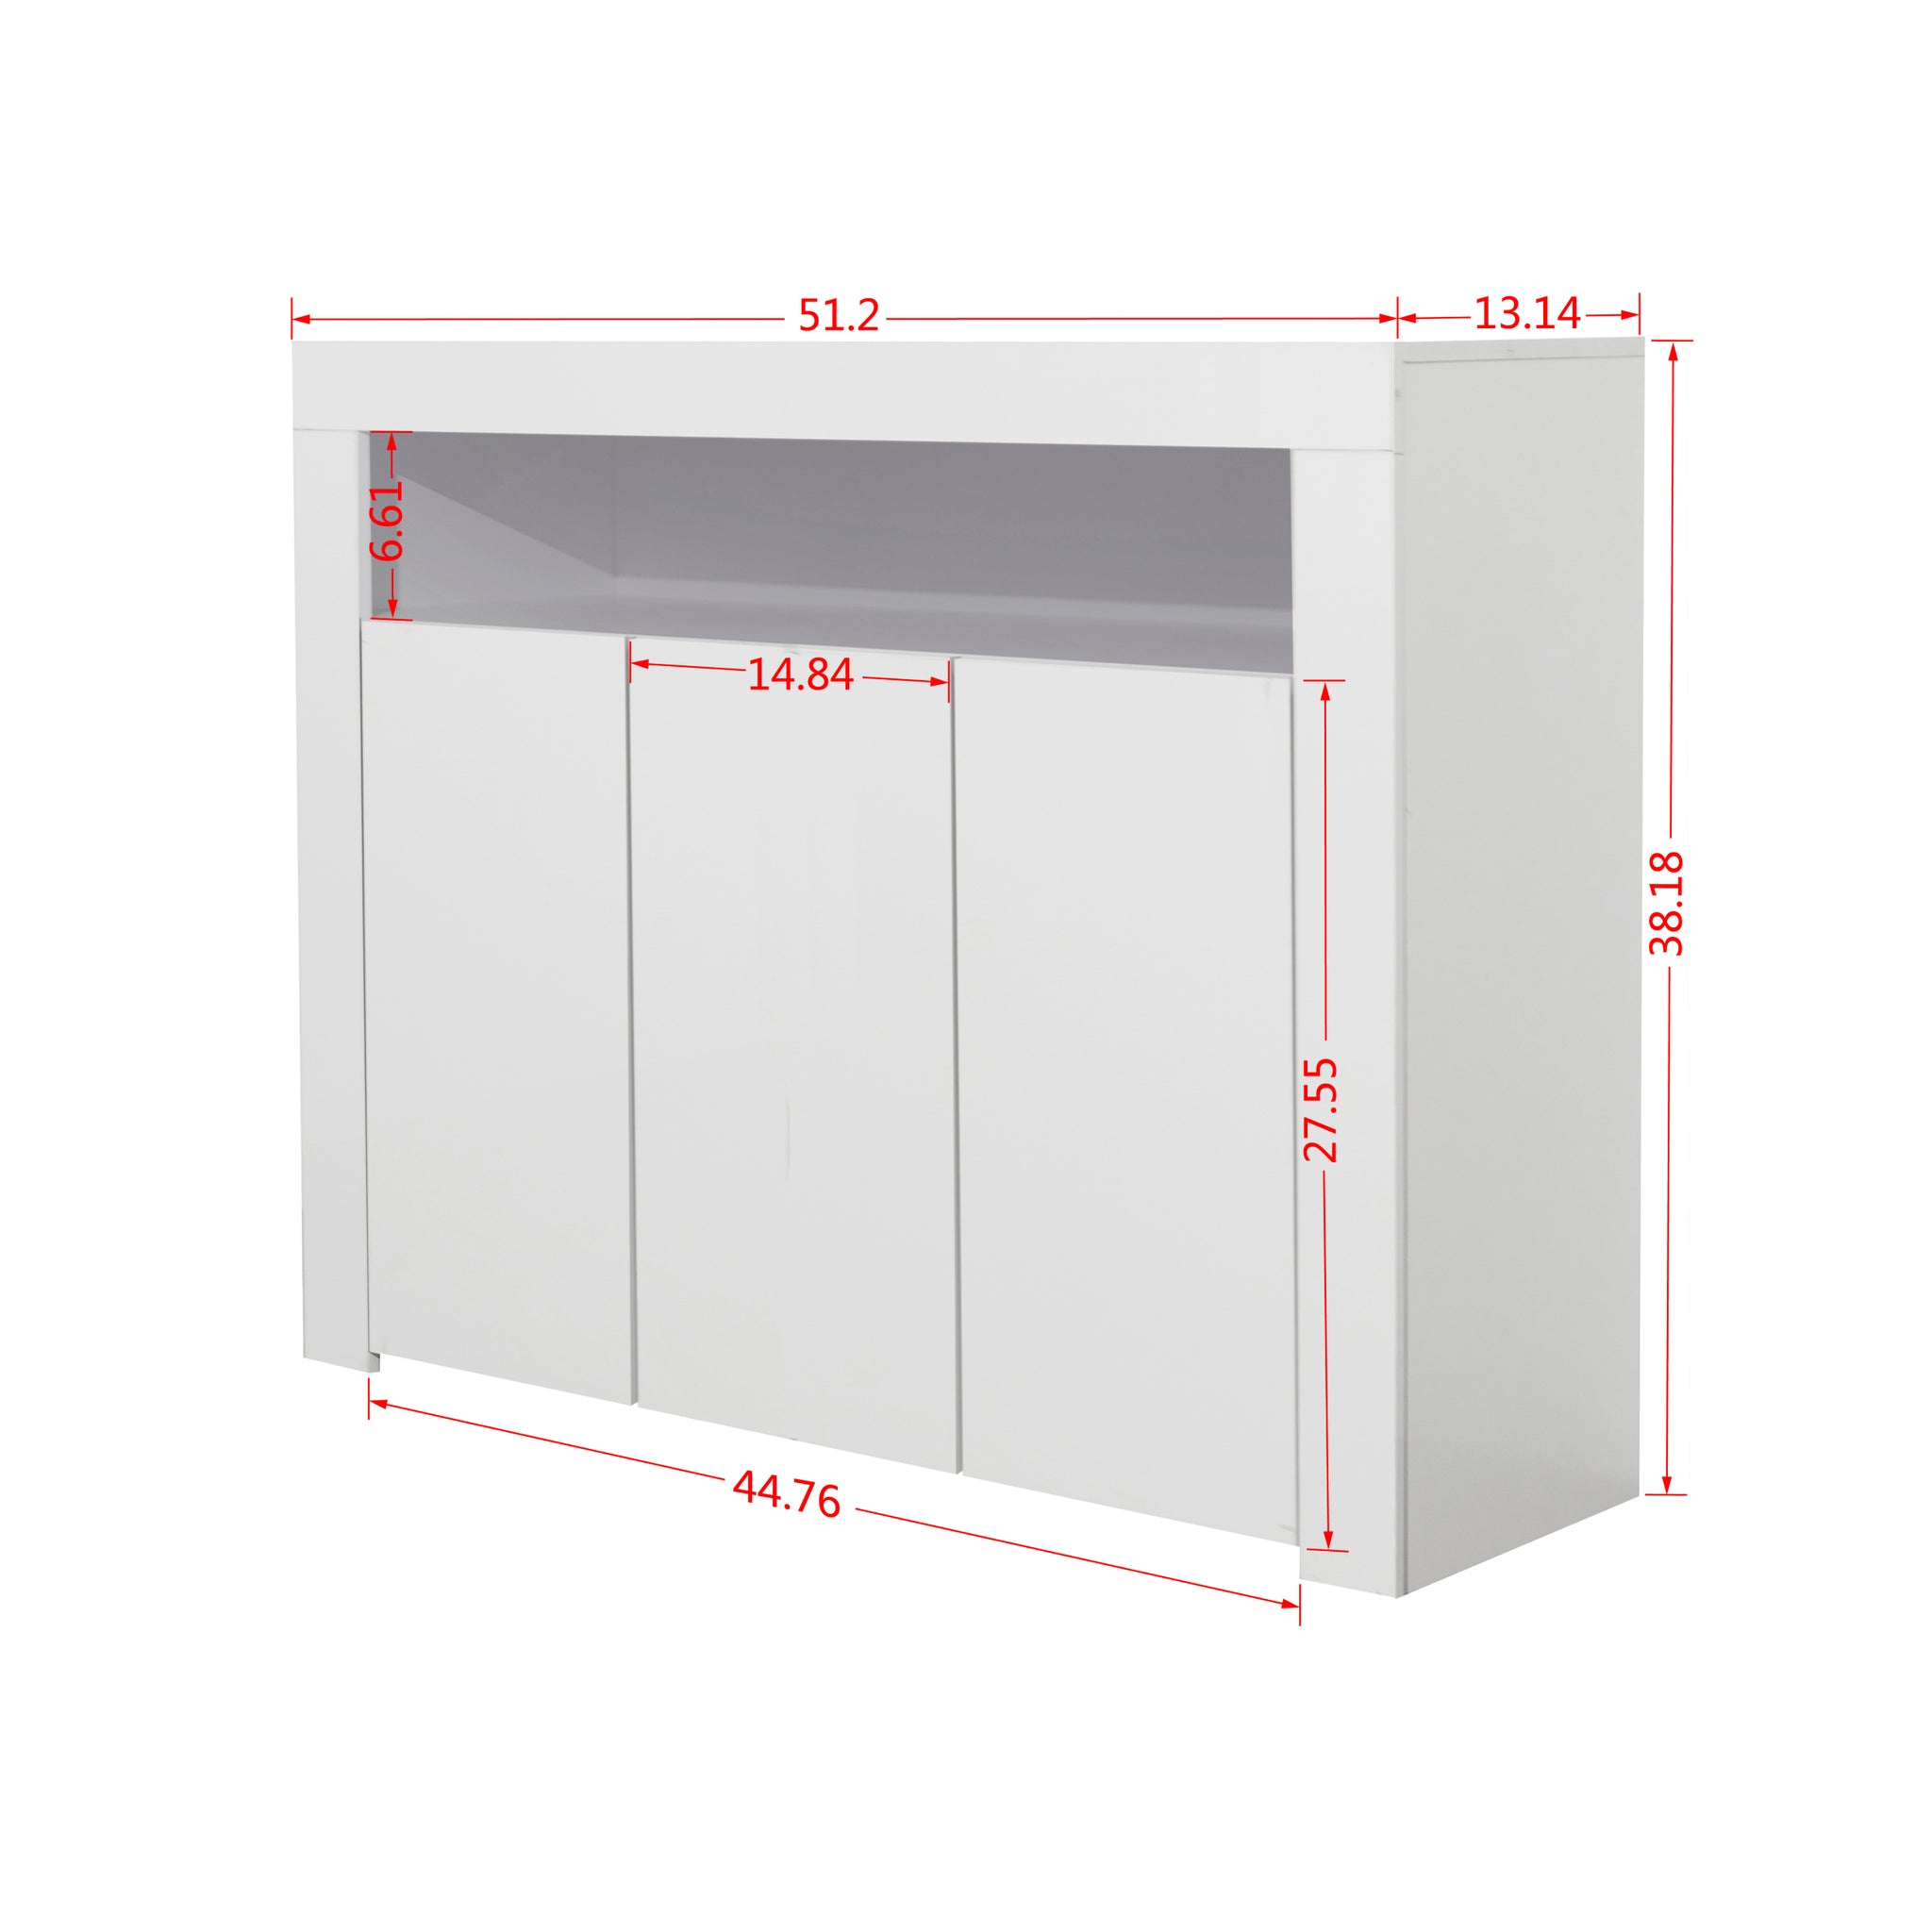 Living Room Sideboard Storage Cabinet Black High Gloss white-mdf